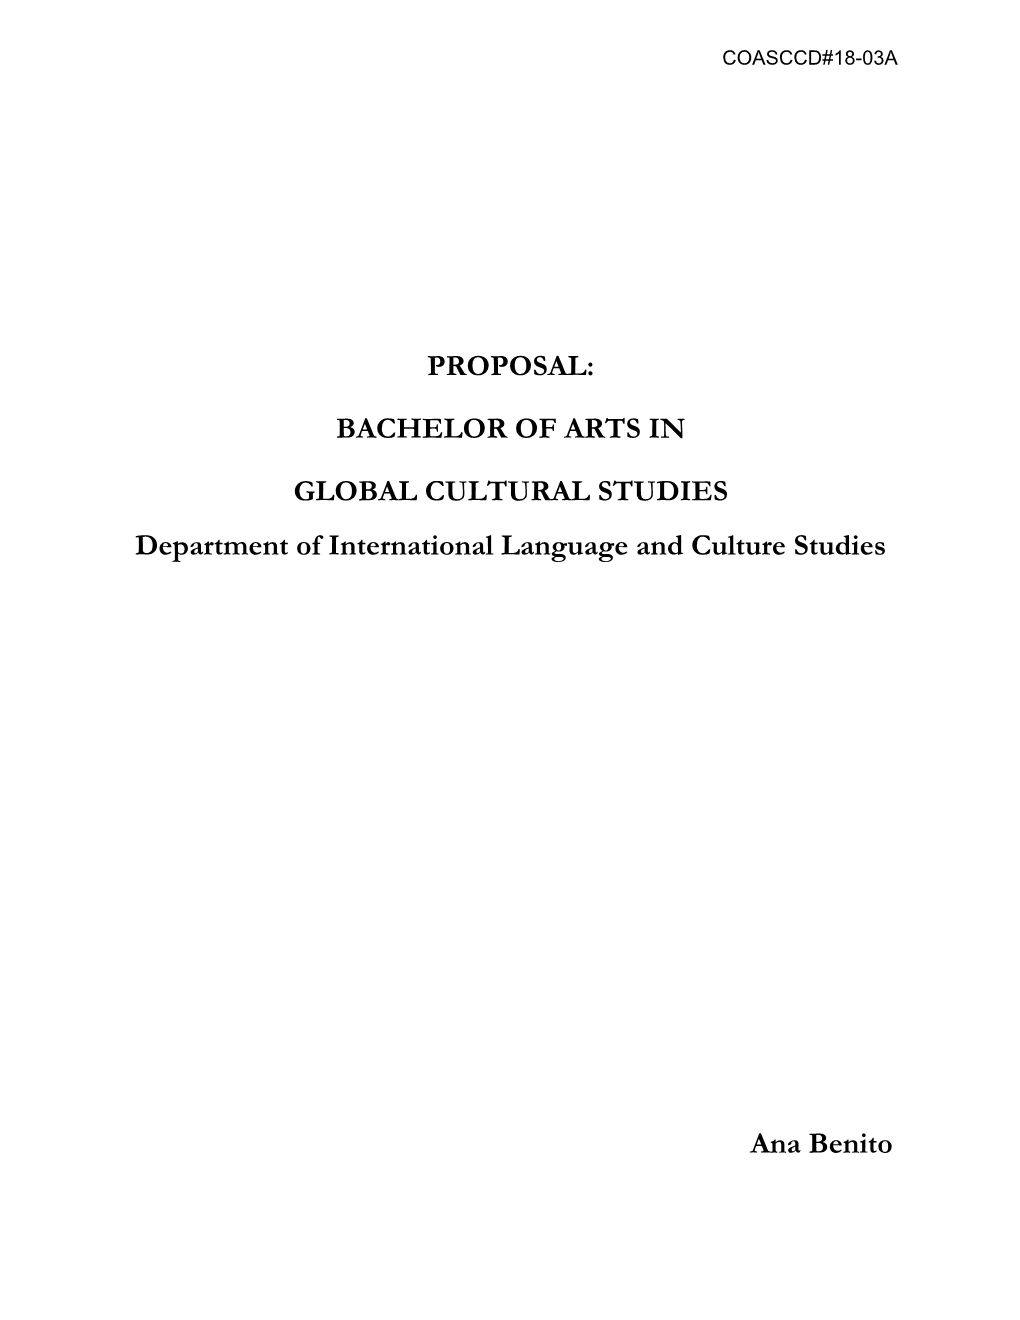 Proposed B.A. in Global Cultural Studies